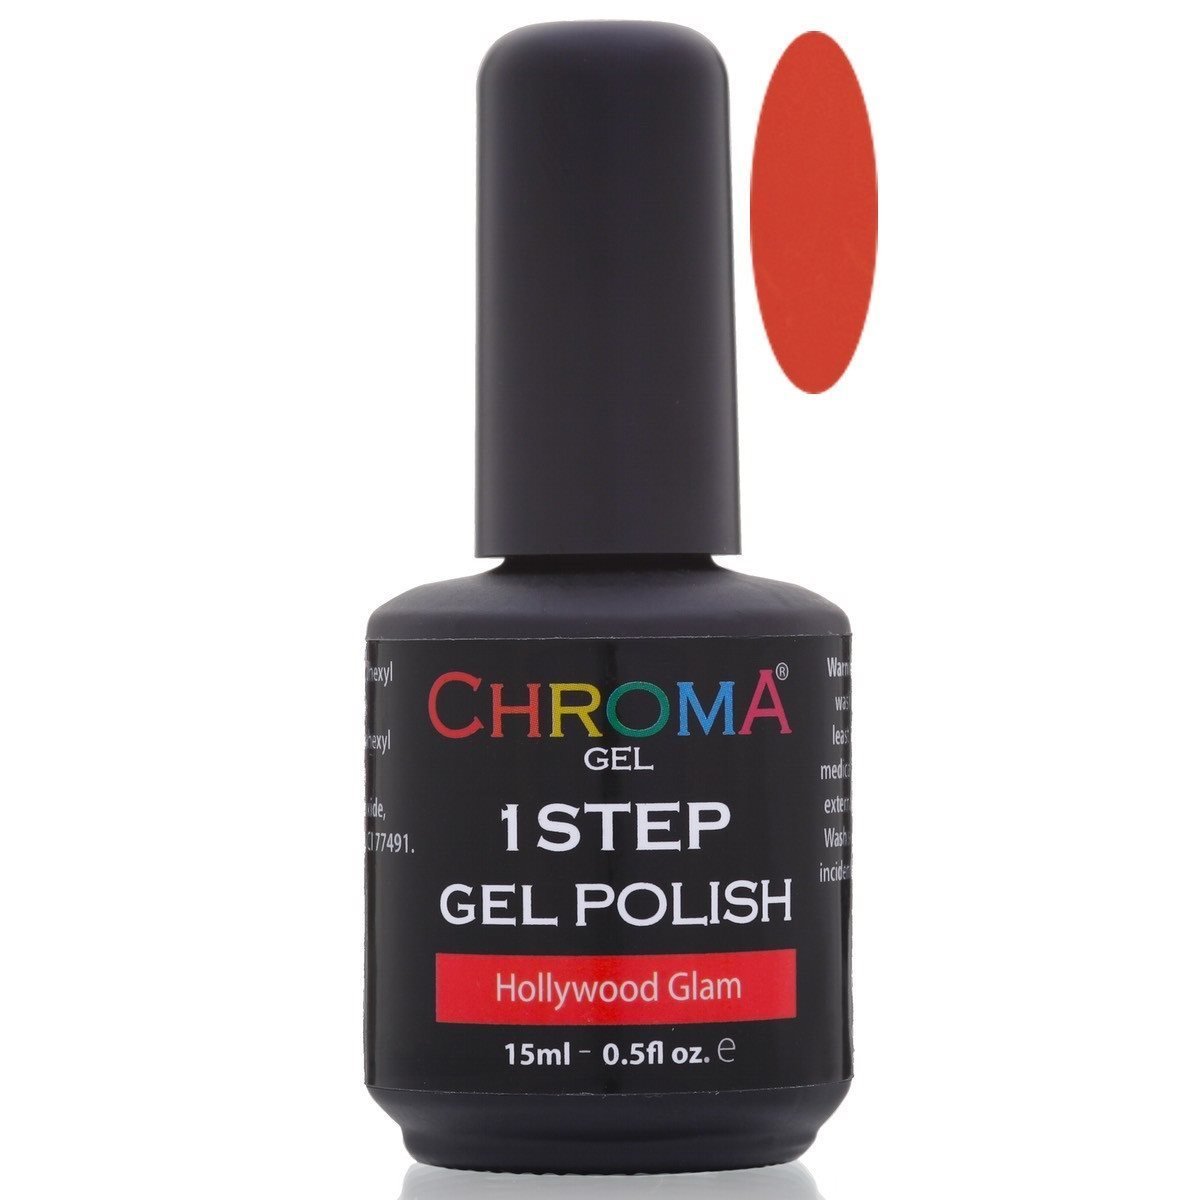 Chroma Gel Hollywood Glam No.22 - Long-Lasting Burnt Red 1 Step Gel Polish - beautyhair.co.ukChroma Gel